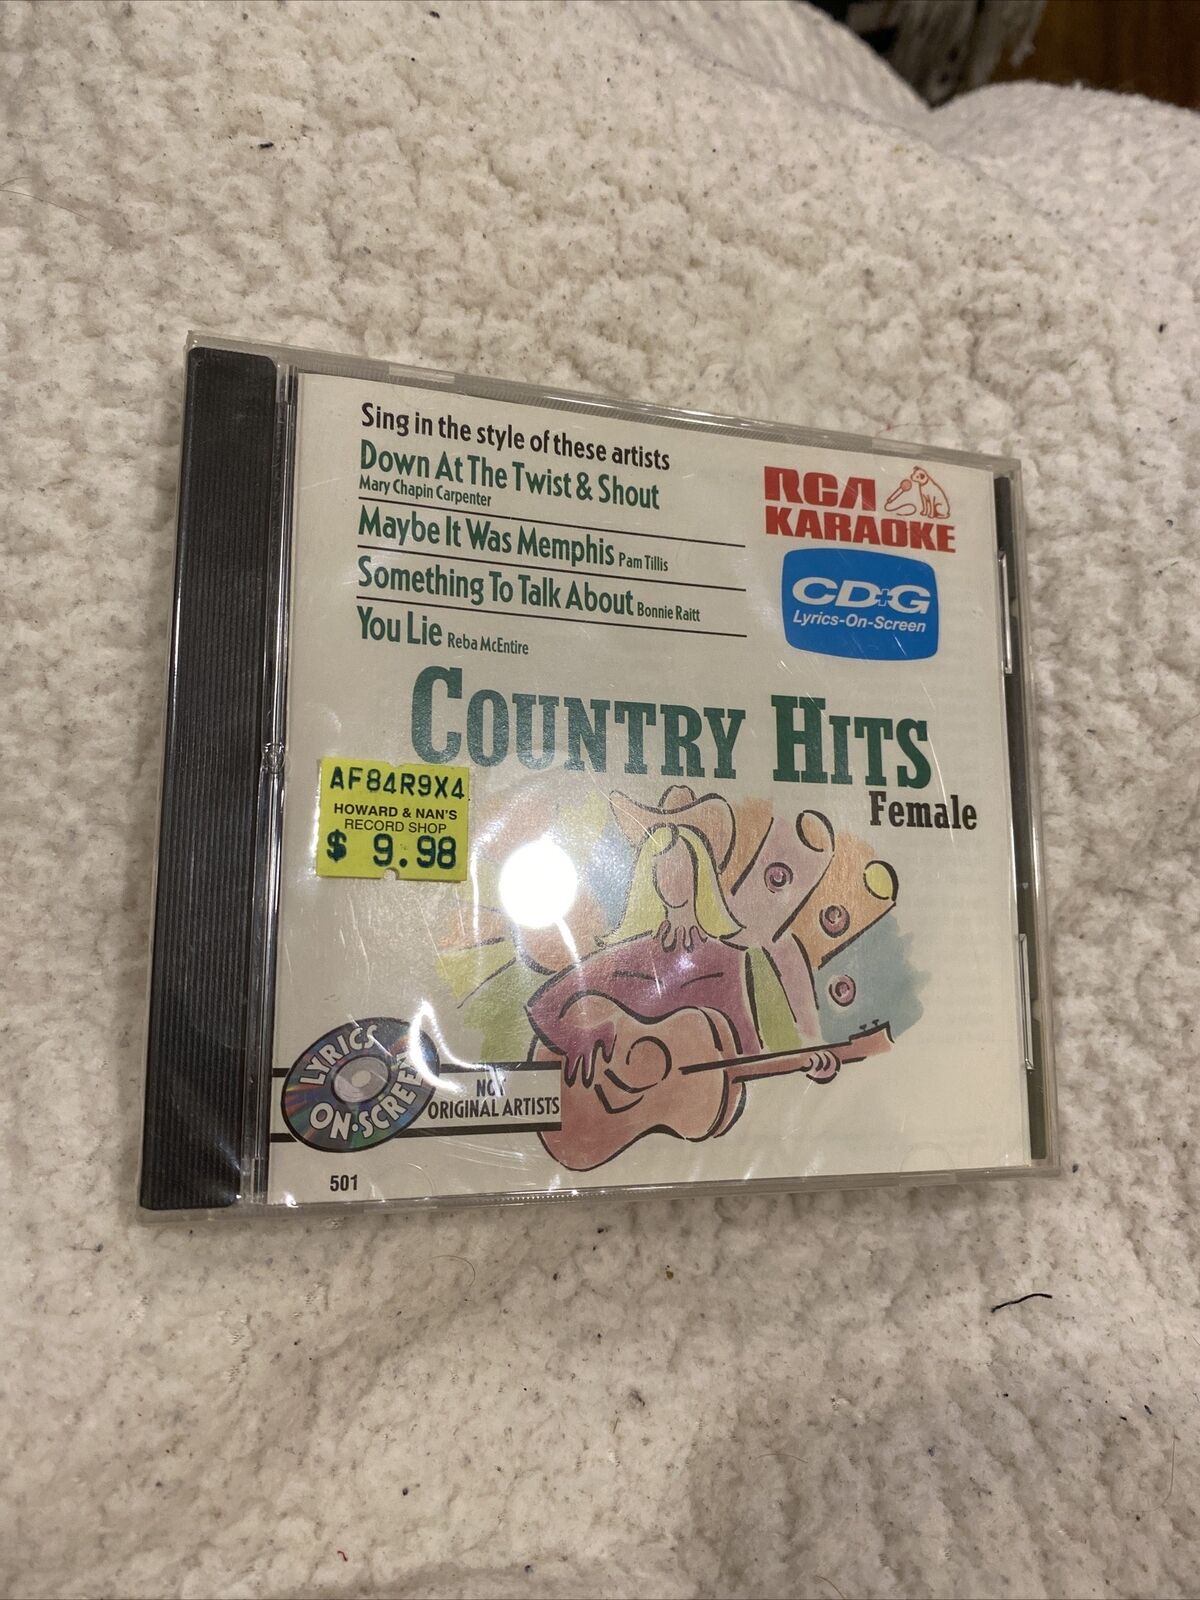 Country Hits Female, Vol. 1 [Super K] by Karaoke (CD, Sep-1994, RCA Karaoke)